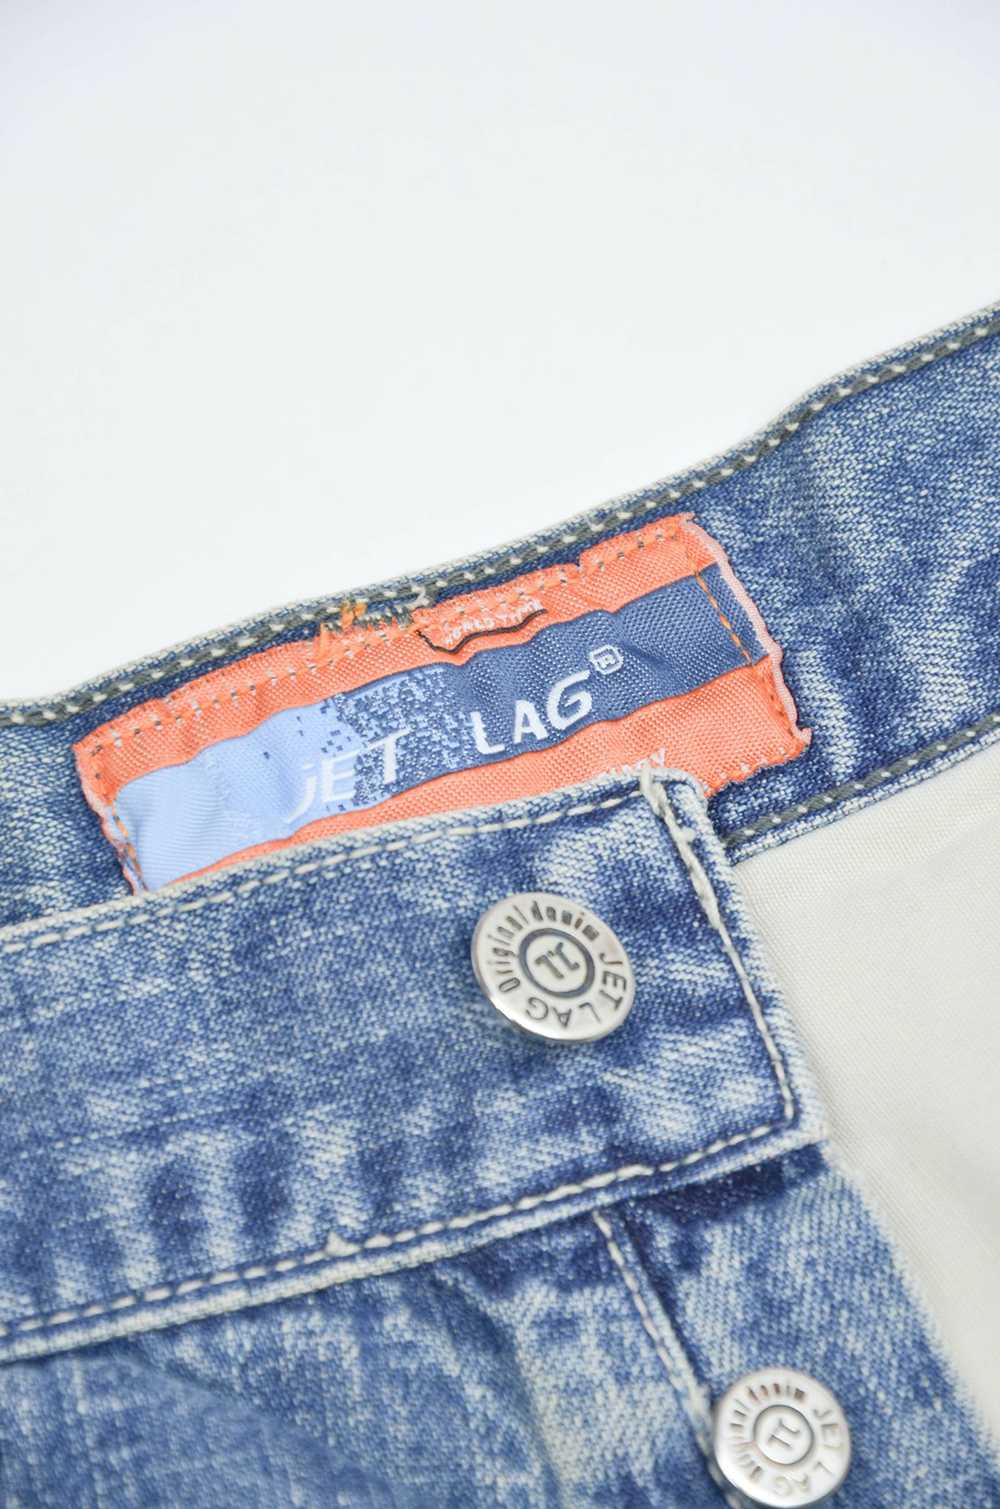 Jet Lag JET LAG Vintage Half Corduroy Jeans - image 7